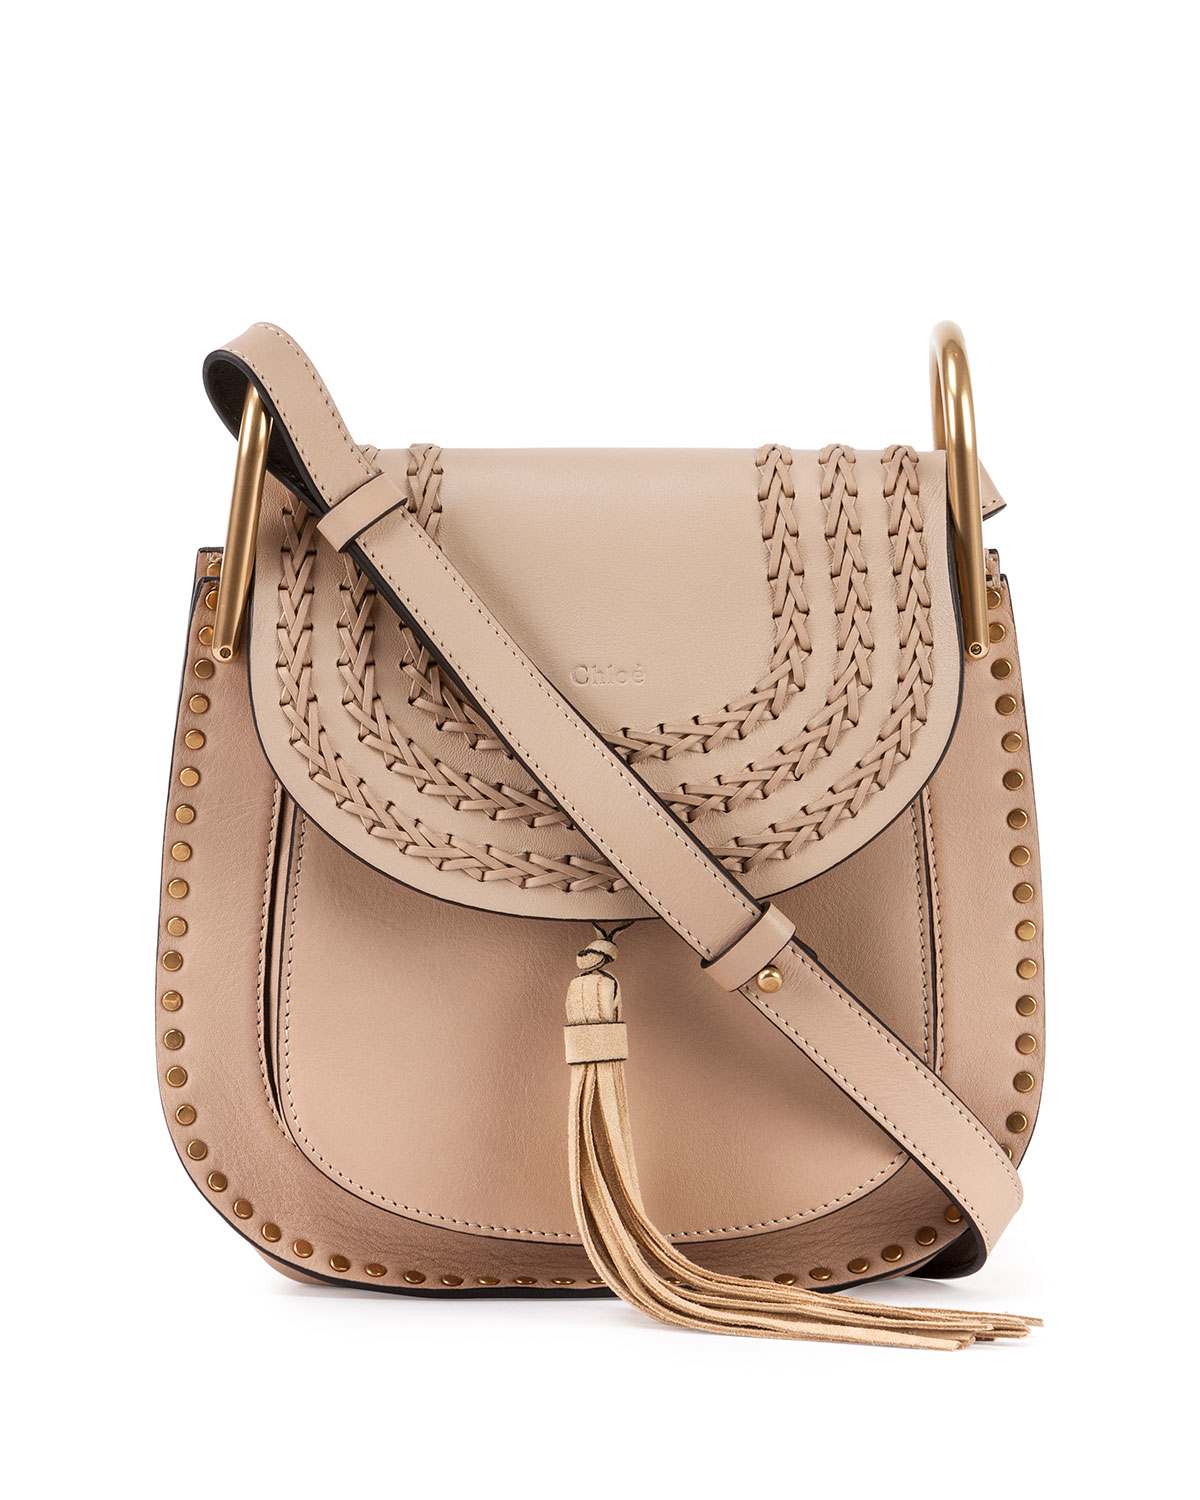 chloe red handbag - Chlo Hudson Small Leather Shoulder Bag in Beige | Lyst